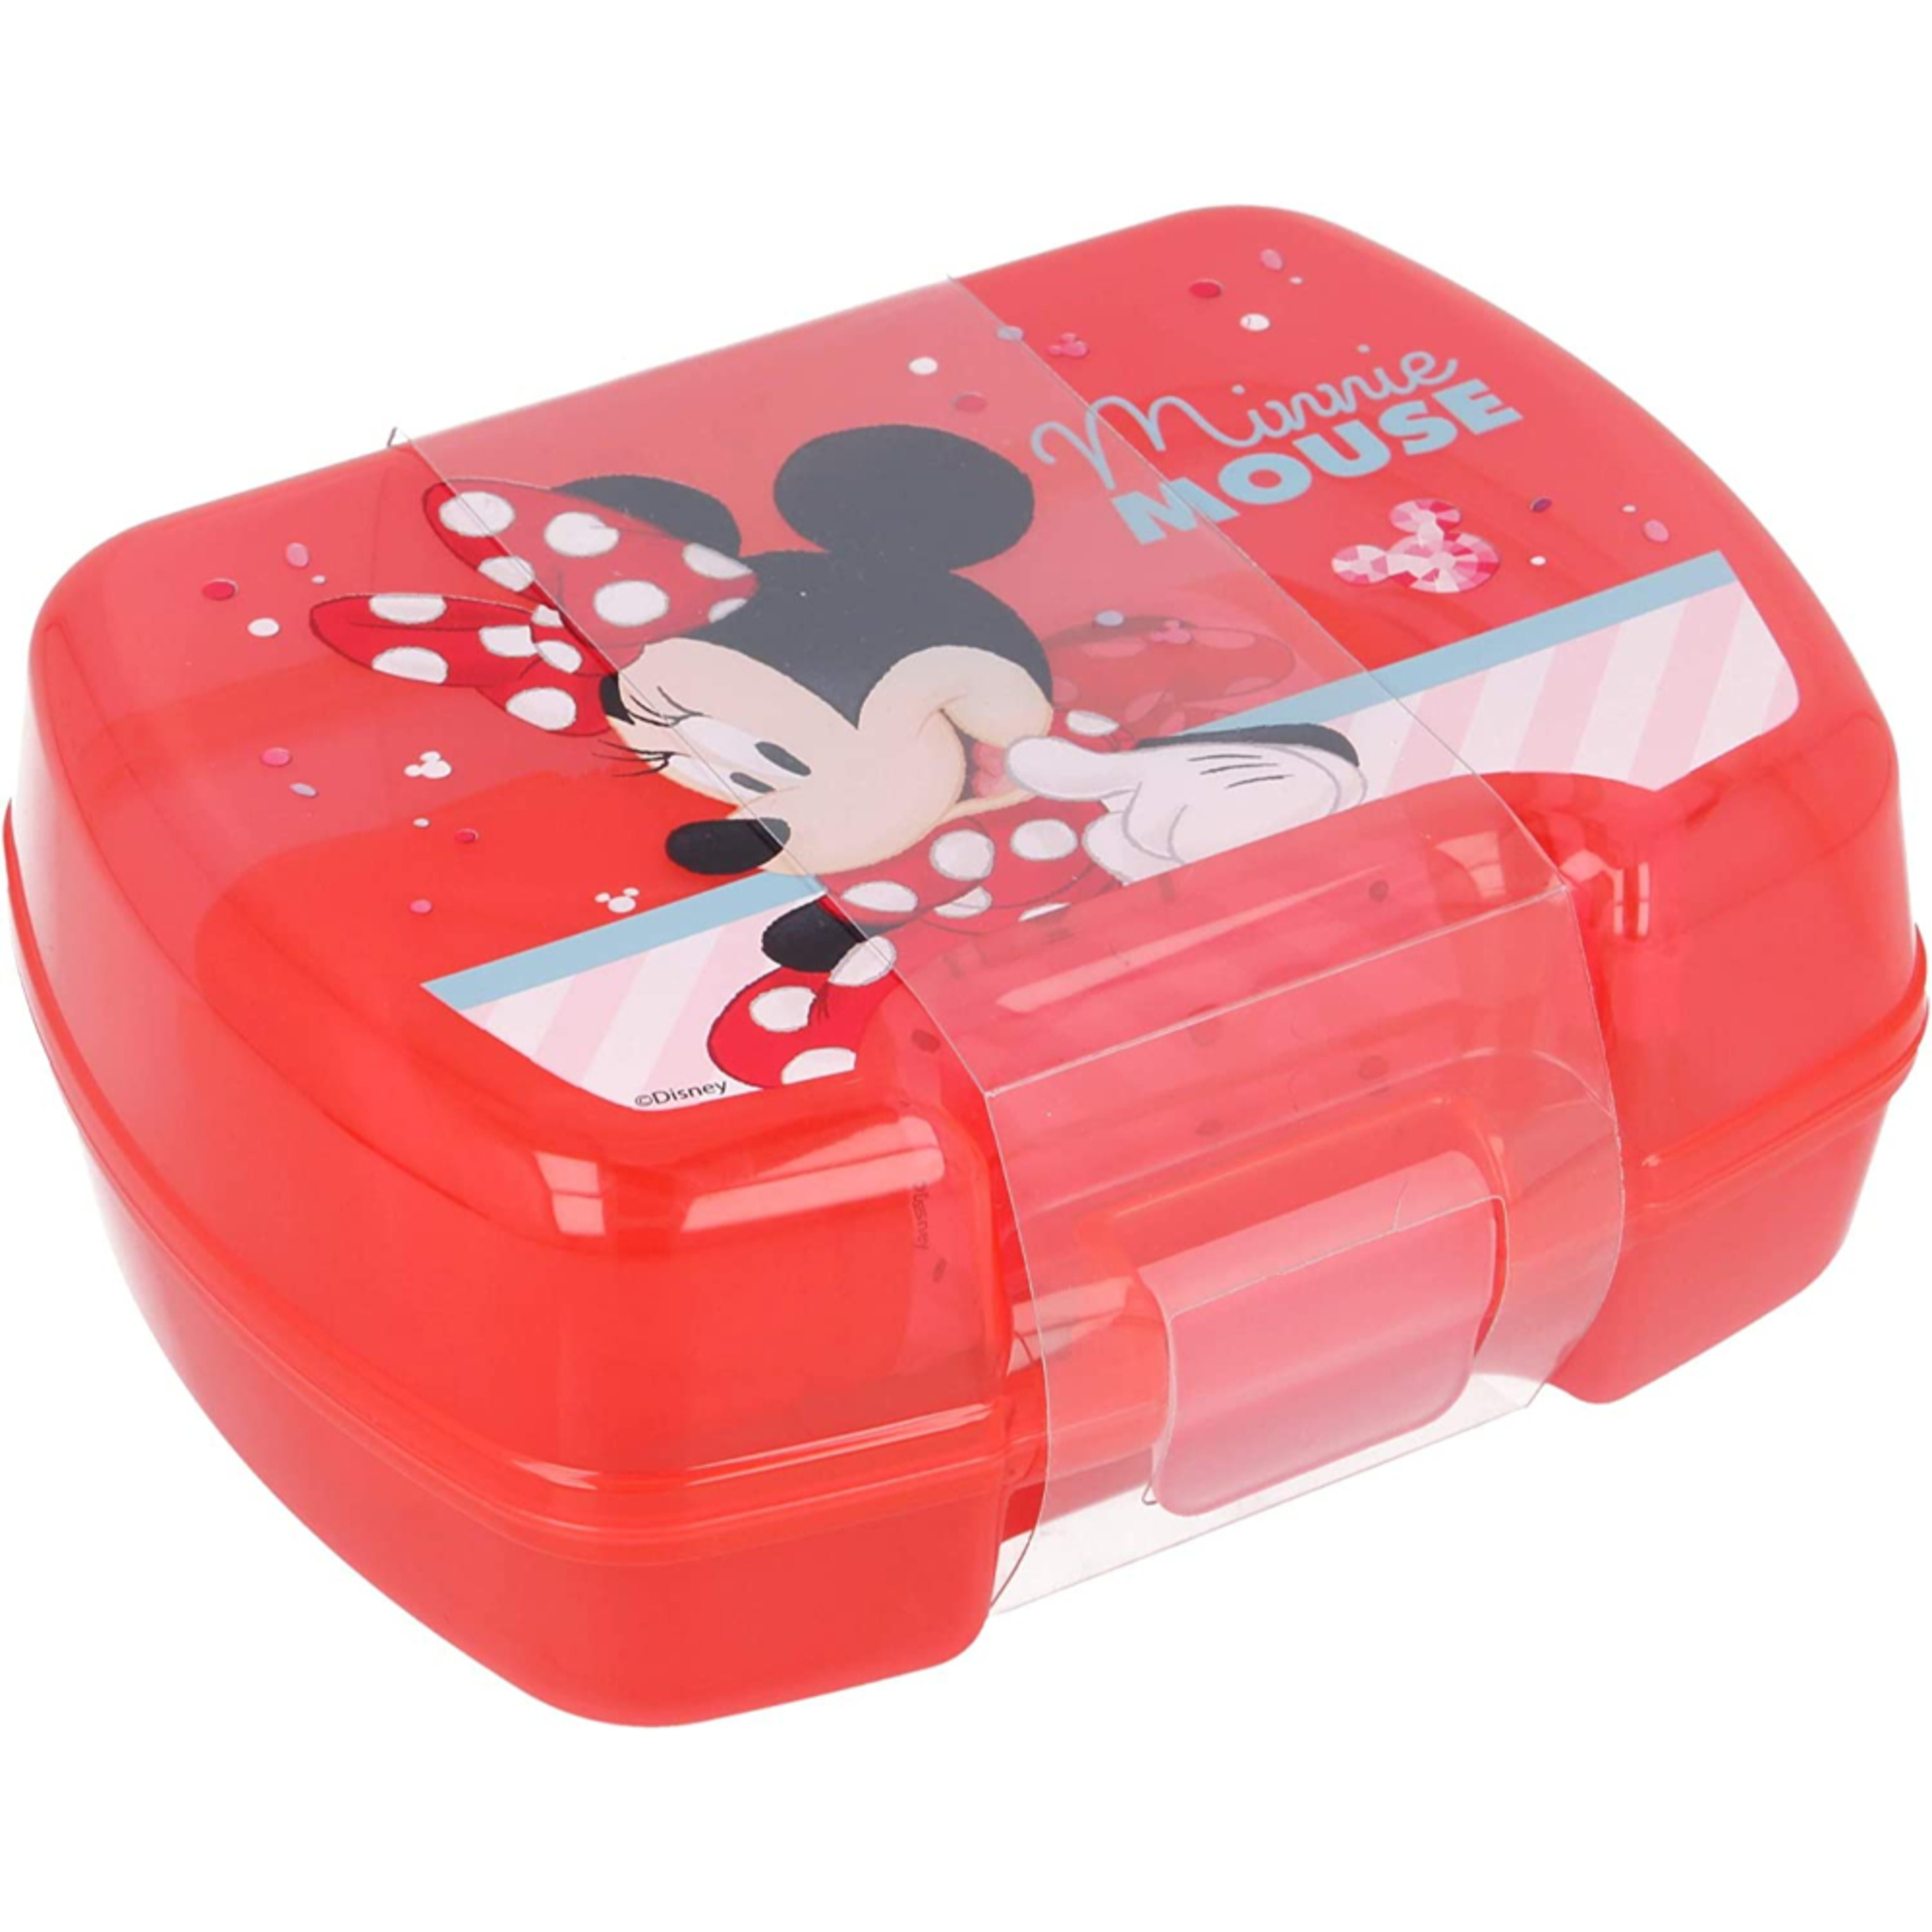 Sandwichera Minnie Mouse 72138 - rojo - 